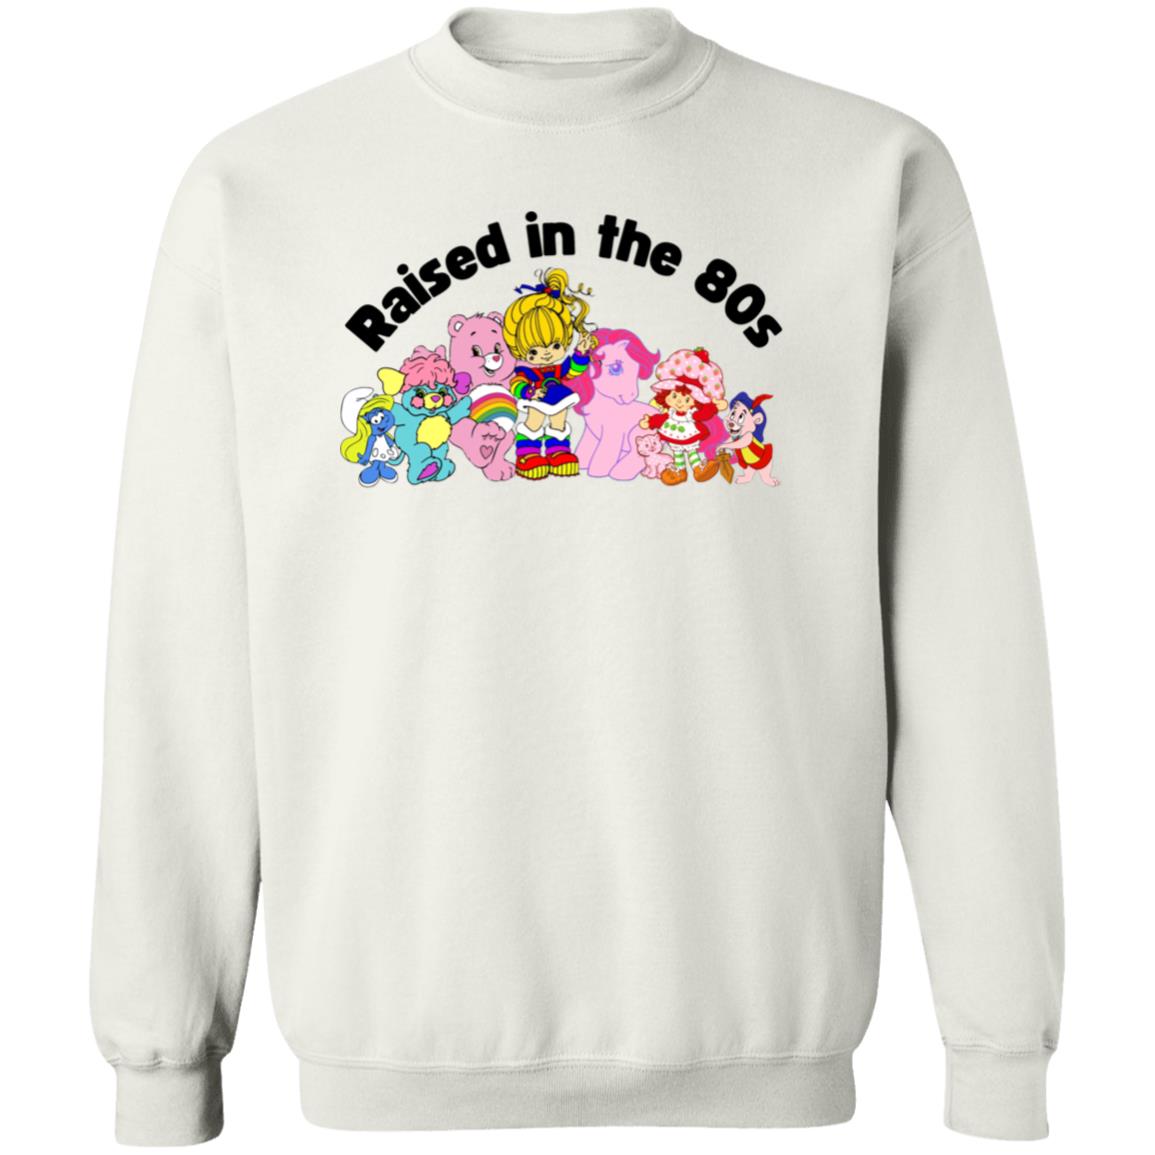 Raised in the 80s Crewneck Pullover Sweatshirt